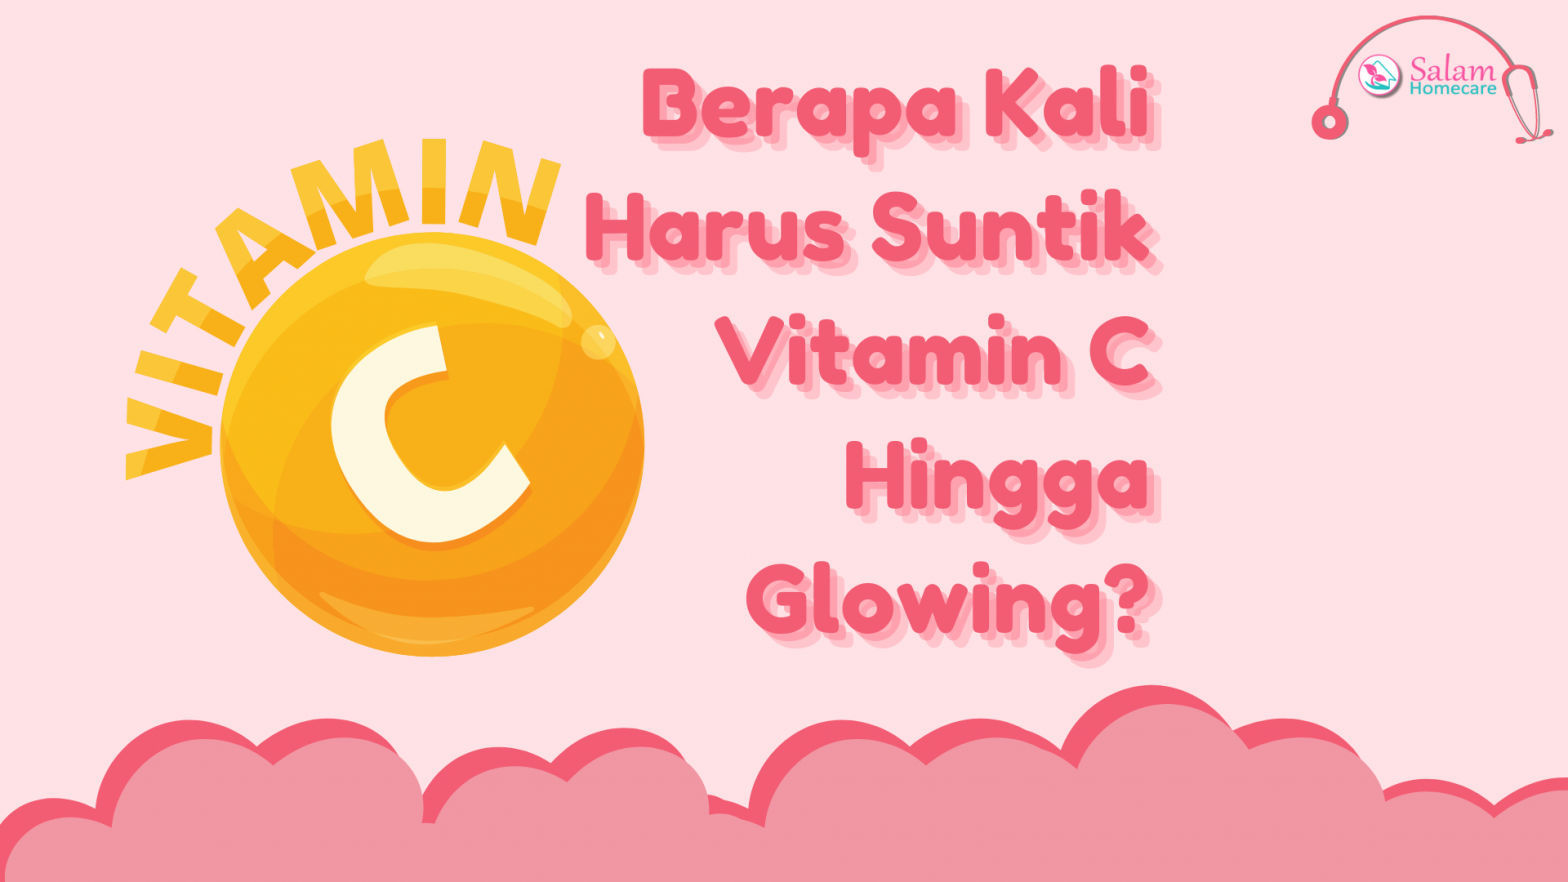 Berapa Kali Harus Suntik Vitamin C Hingga Glowing?